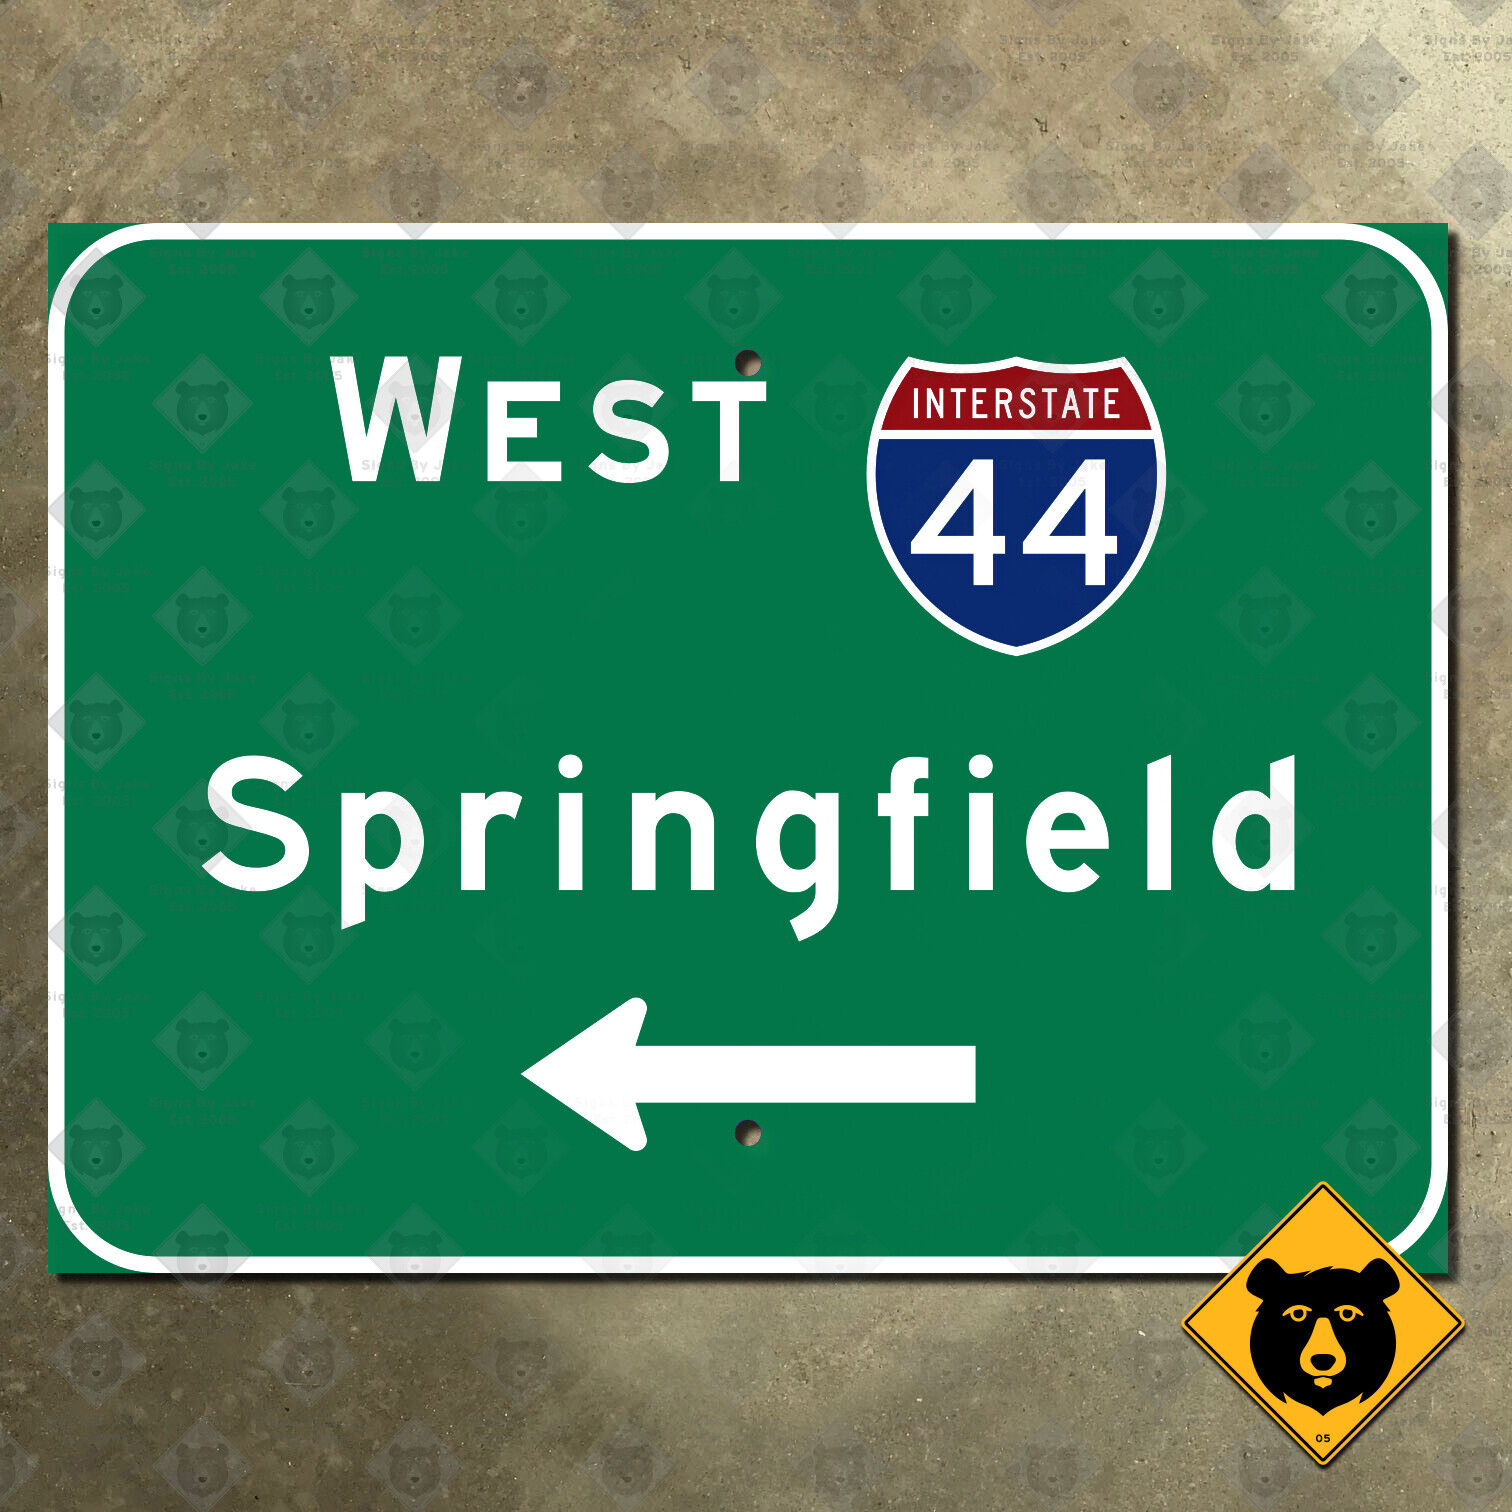 Missouri Interstate 44 west Springfield freeway highway road sign 12x9